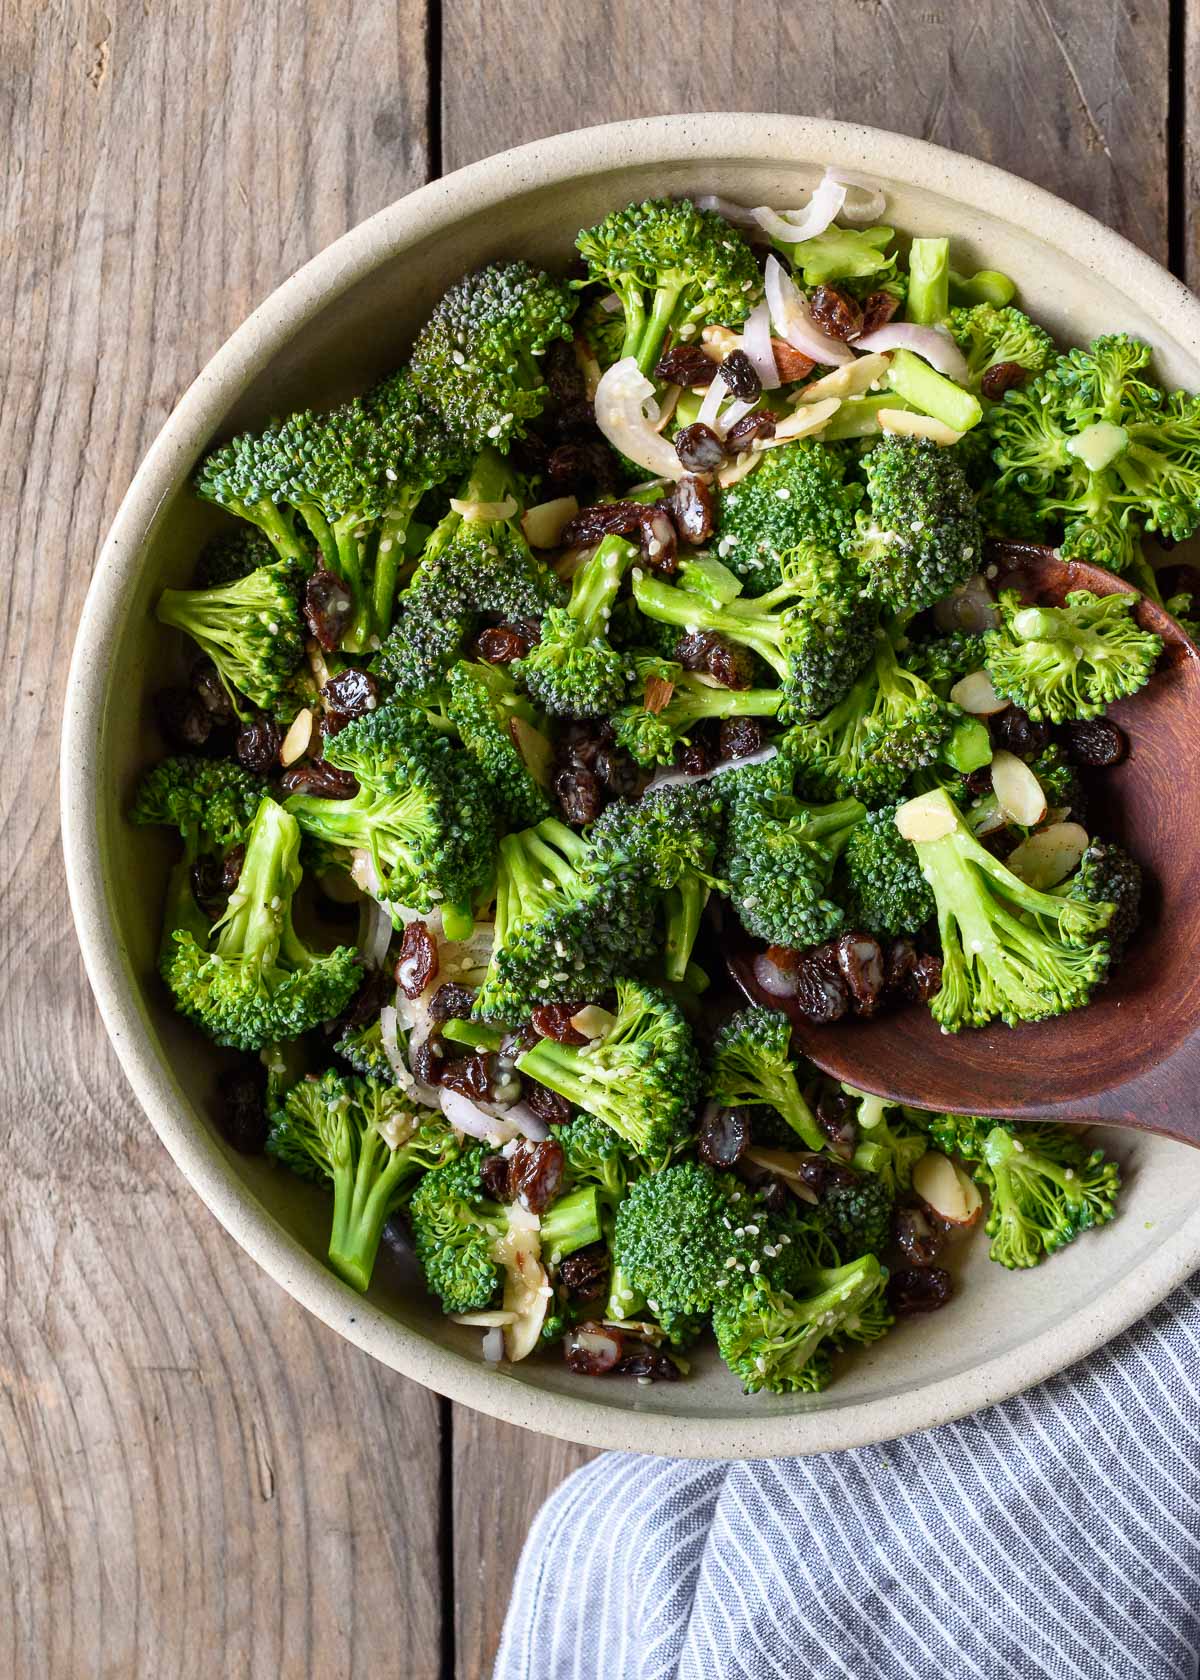 A bowl of broccoli salad with shallots, almonds, raisins, and a lemon tahini dressing.